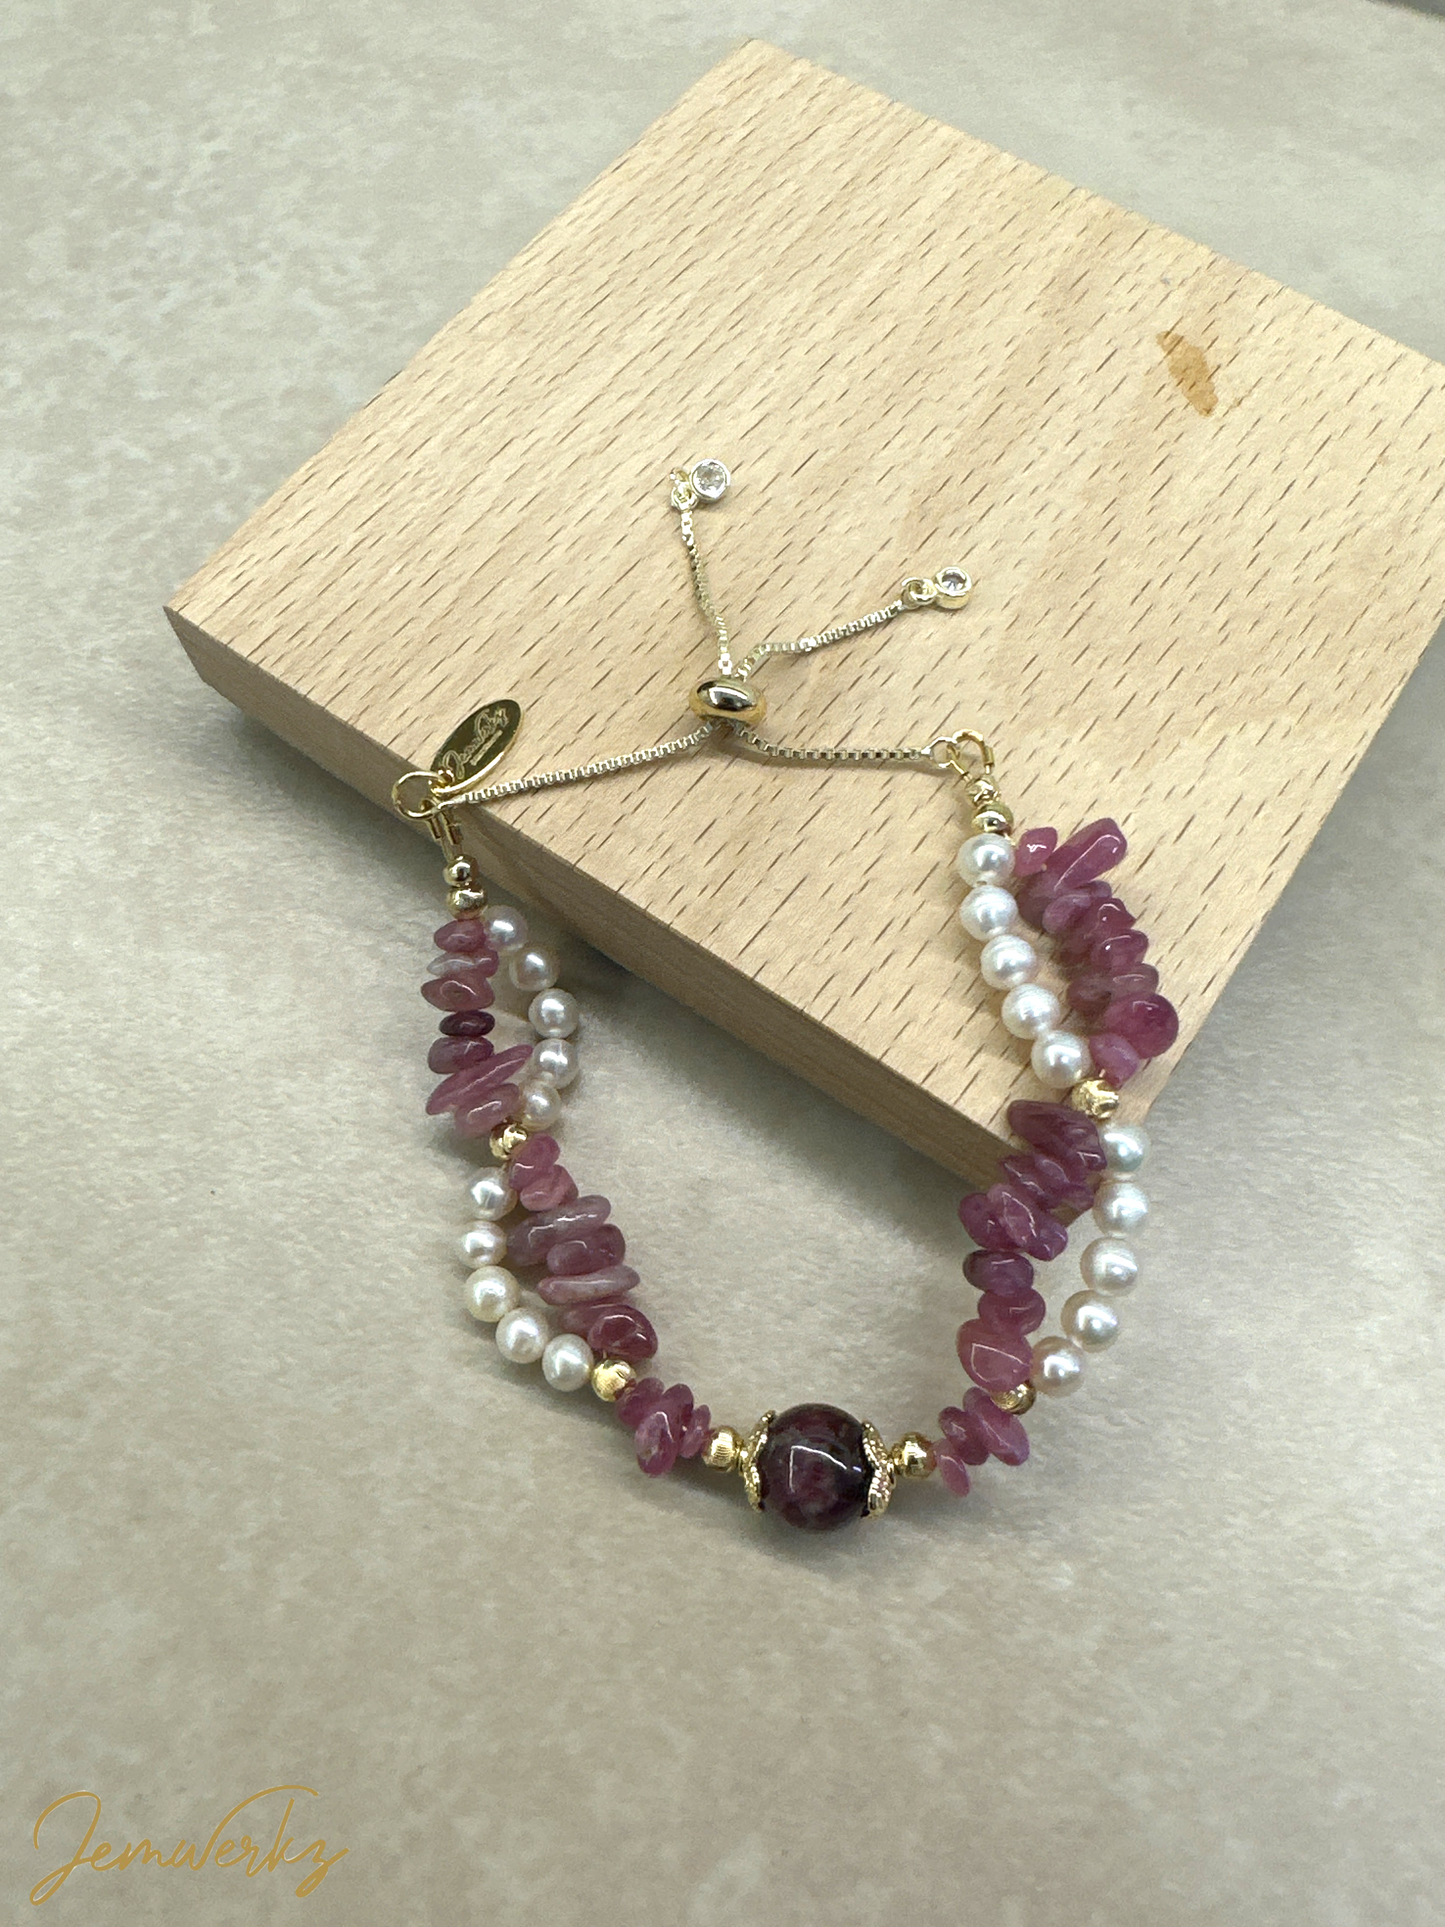 TAMAO 1.0 - Pink Tourmaline and Swarovski Pearls Bracelet